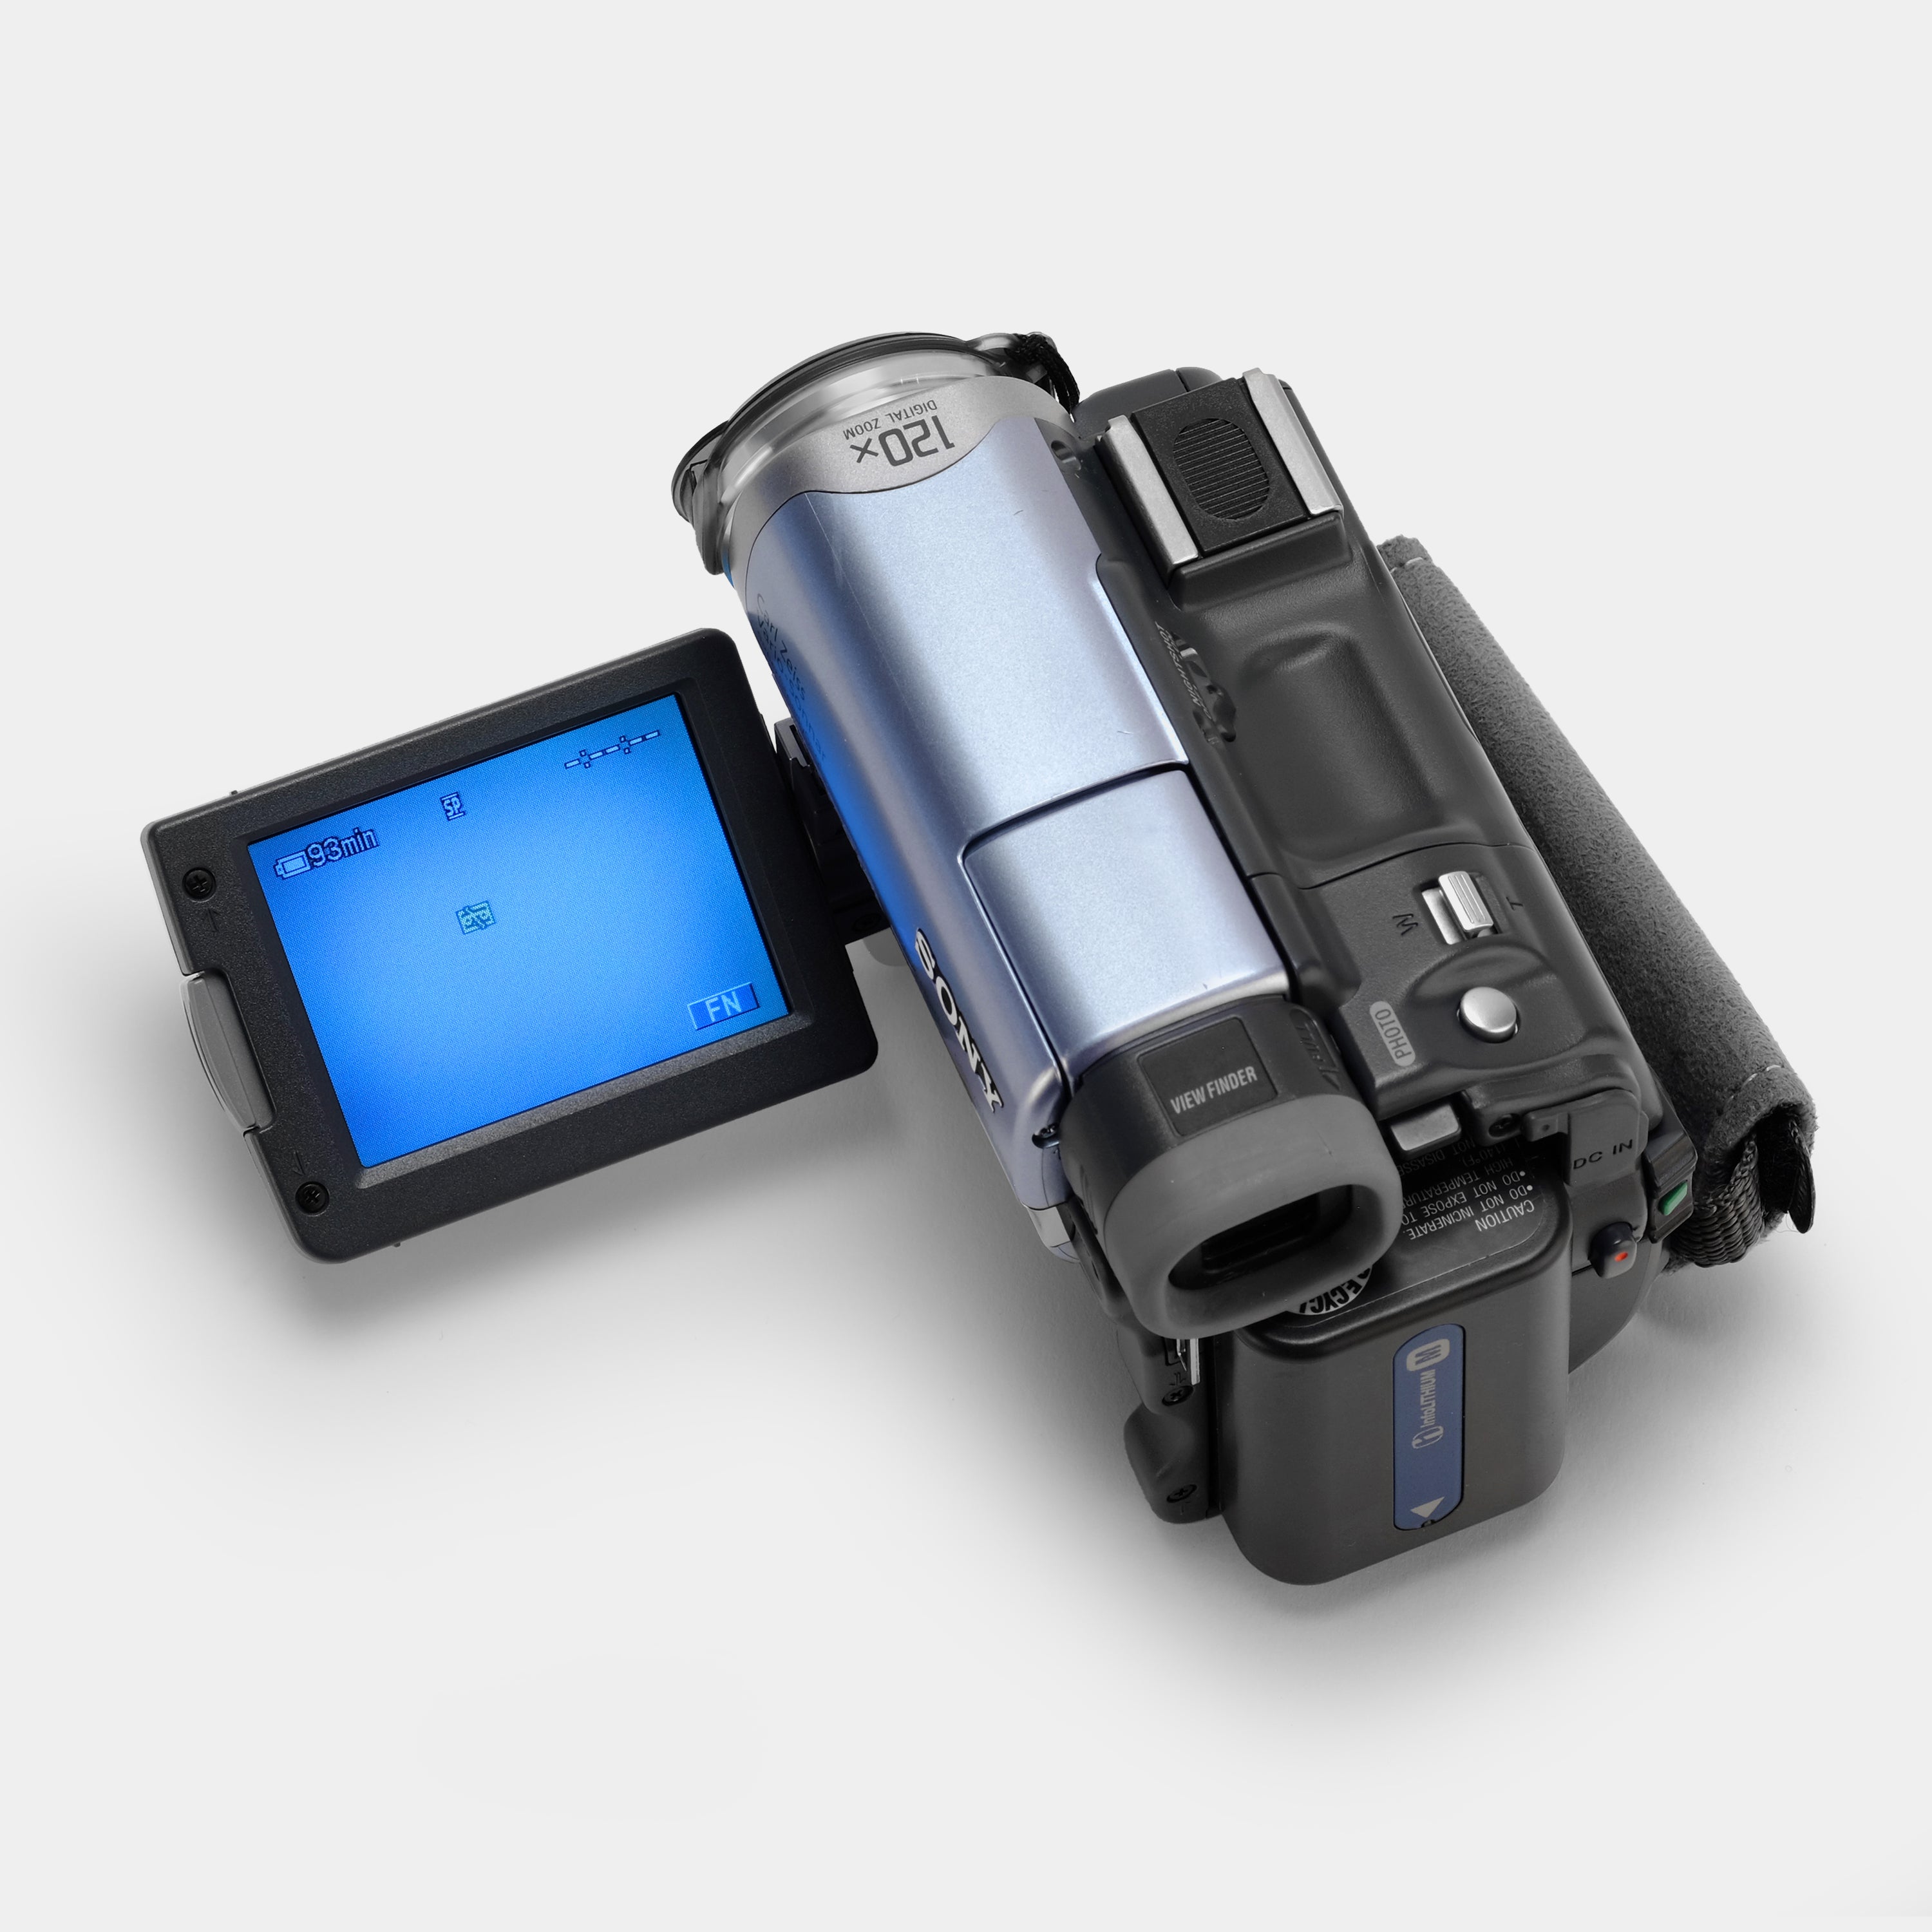 Sony Handycam DCR-TRV19 Blue Digital Video Camcorder